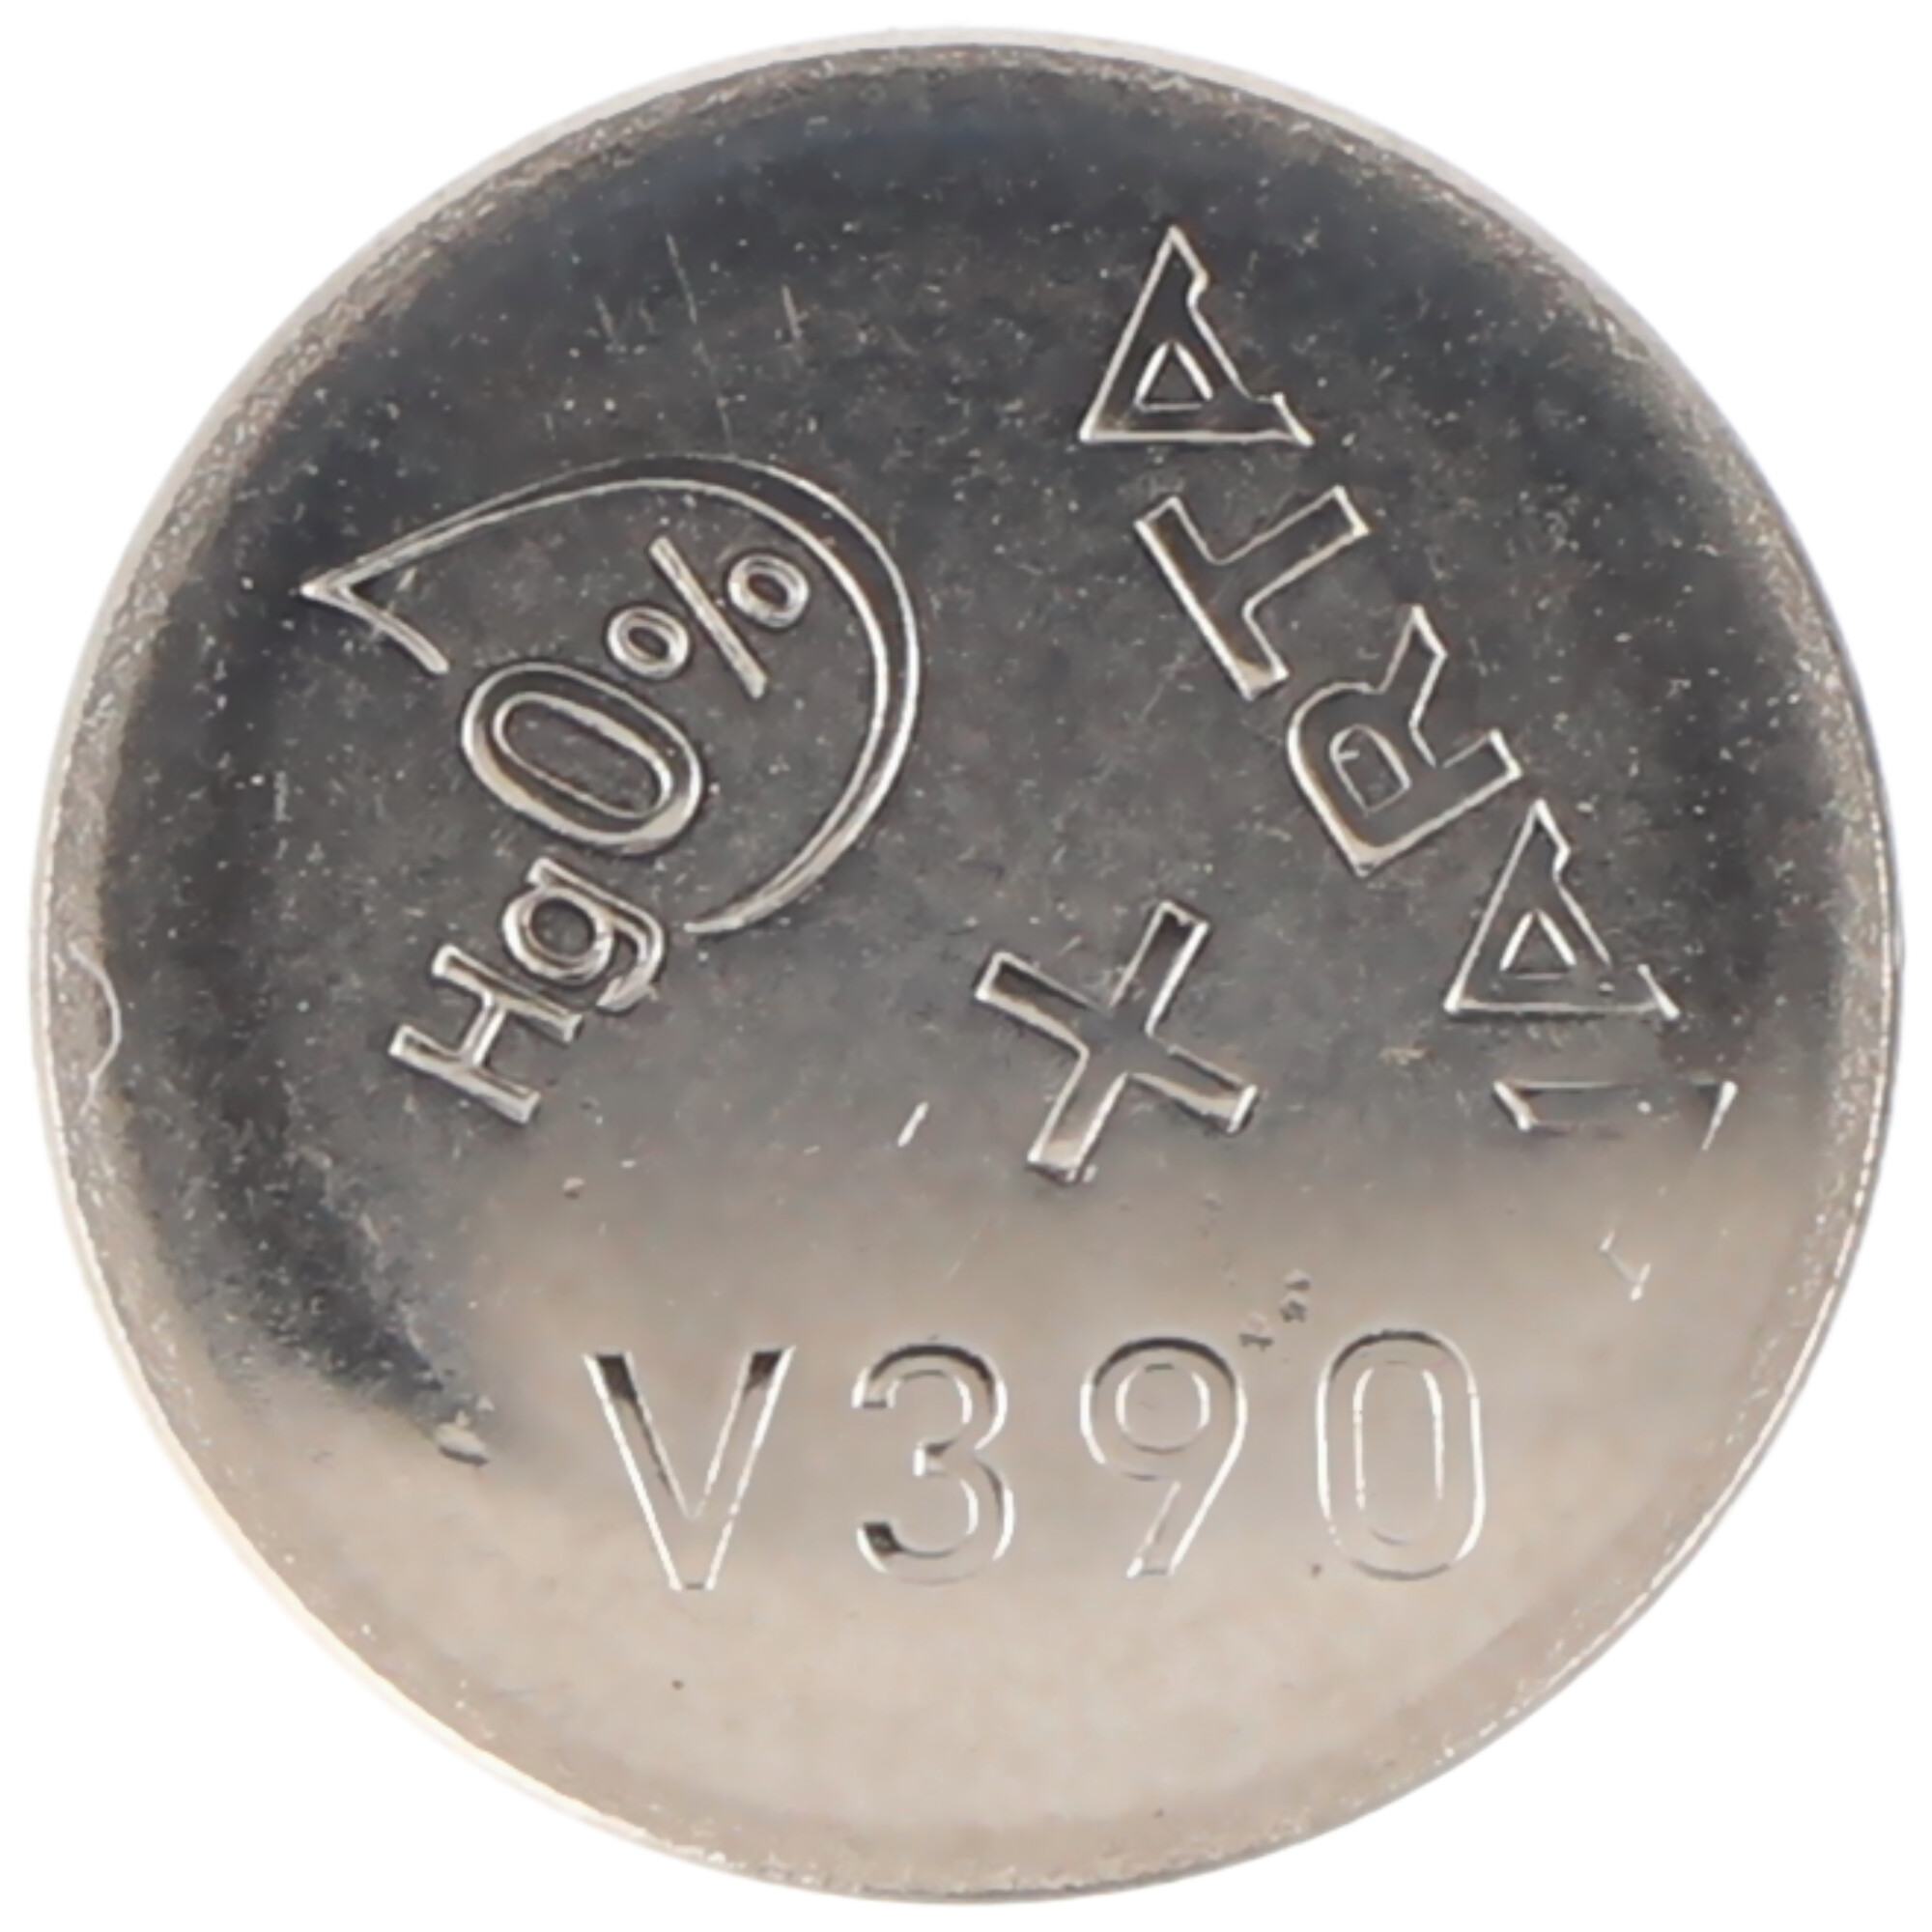 Varta SR54 (V390) - Silberoxid-Zink-Knopfzelle, 1,55 V Uhrenbatterie